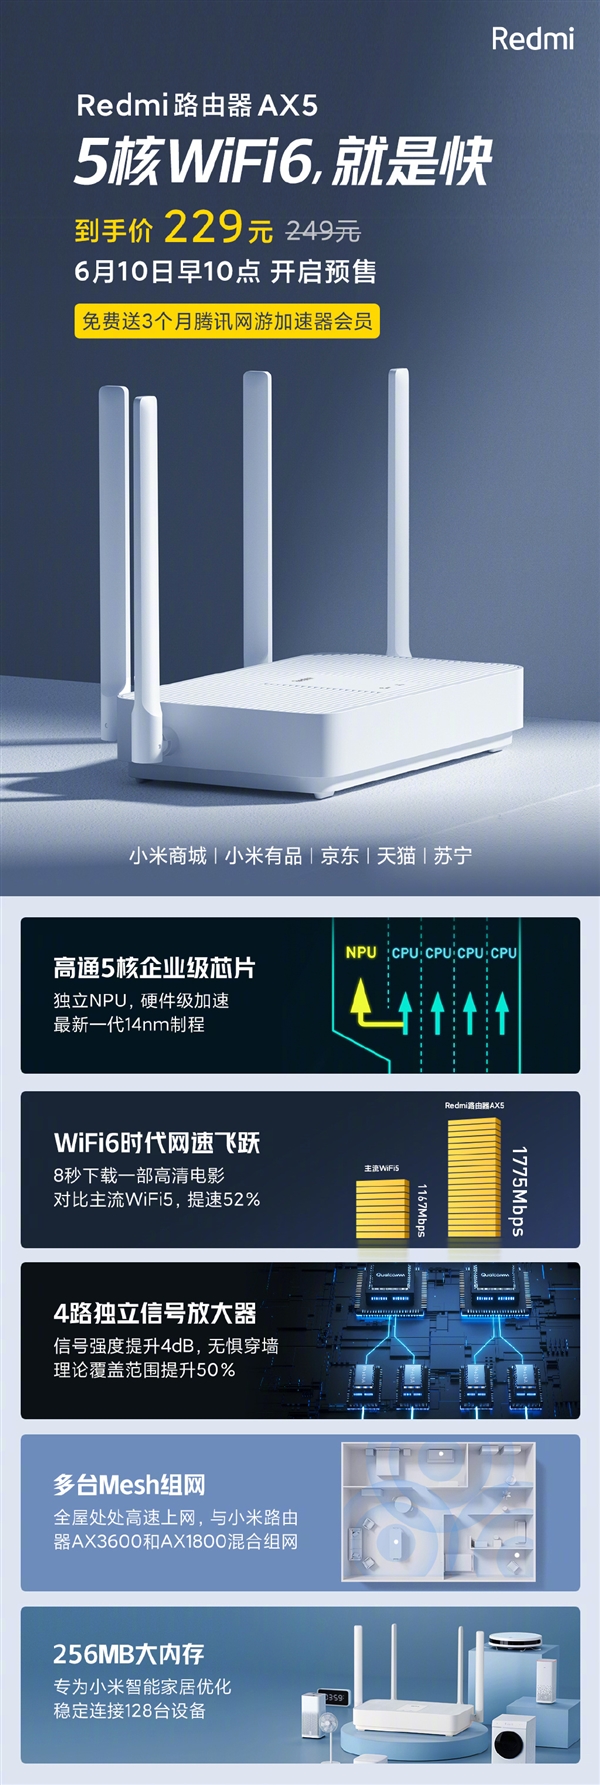 Redmi首款WiFi 6路由器AX5预售：229元